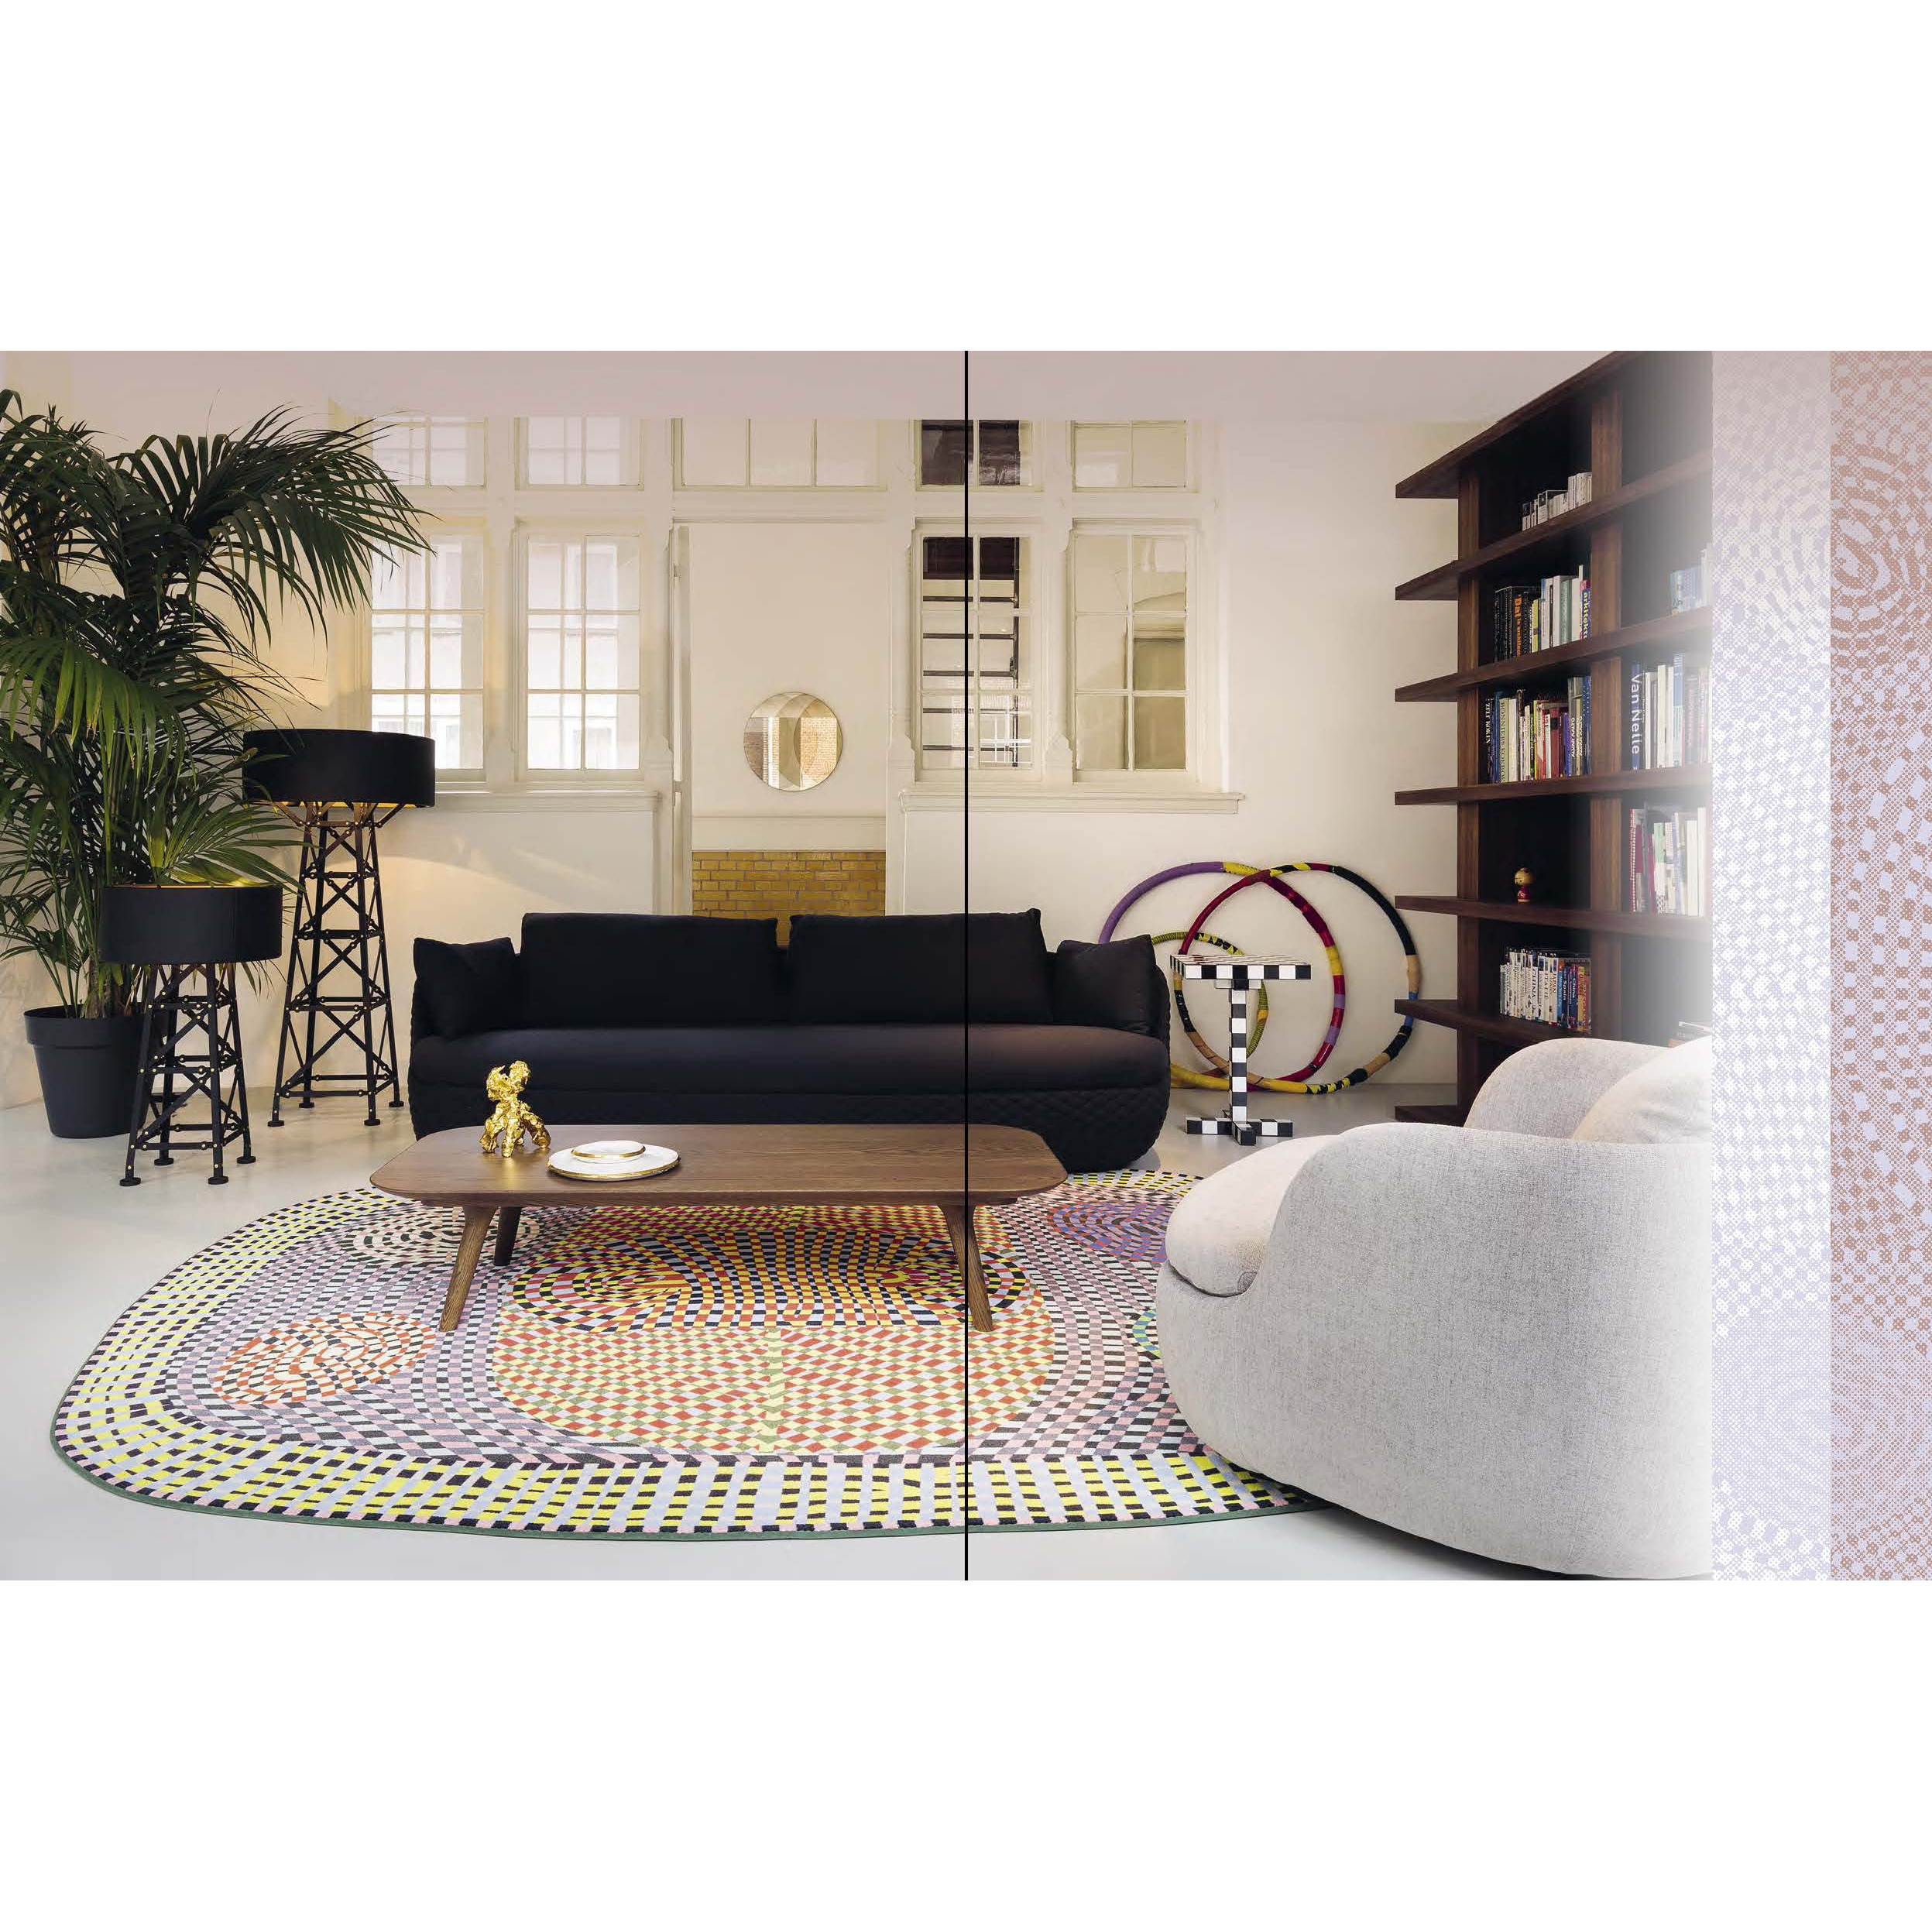 Carpets &amp; Rugs : Every home needs a soft spot